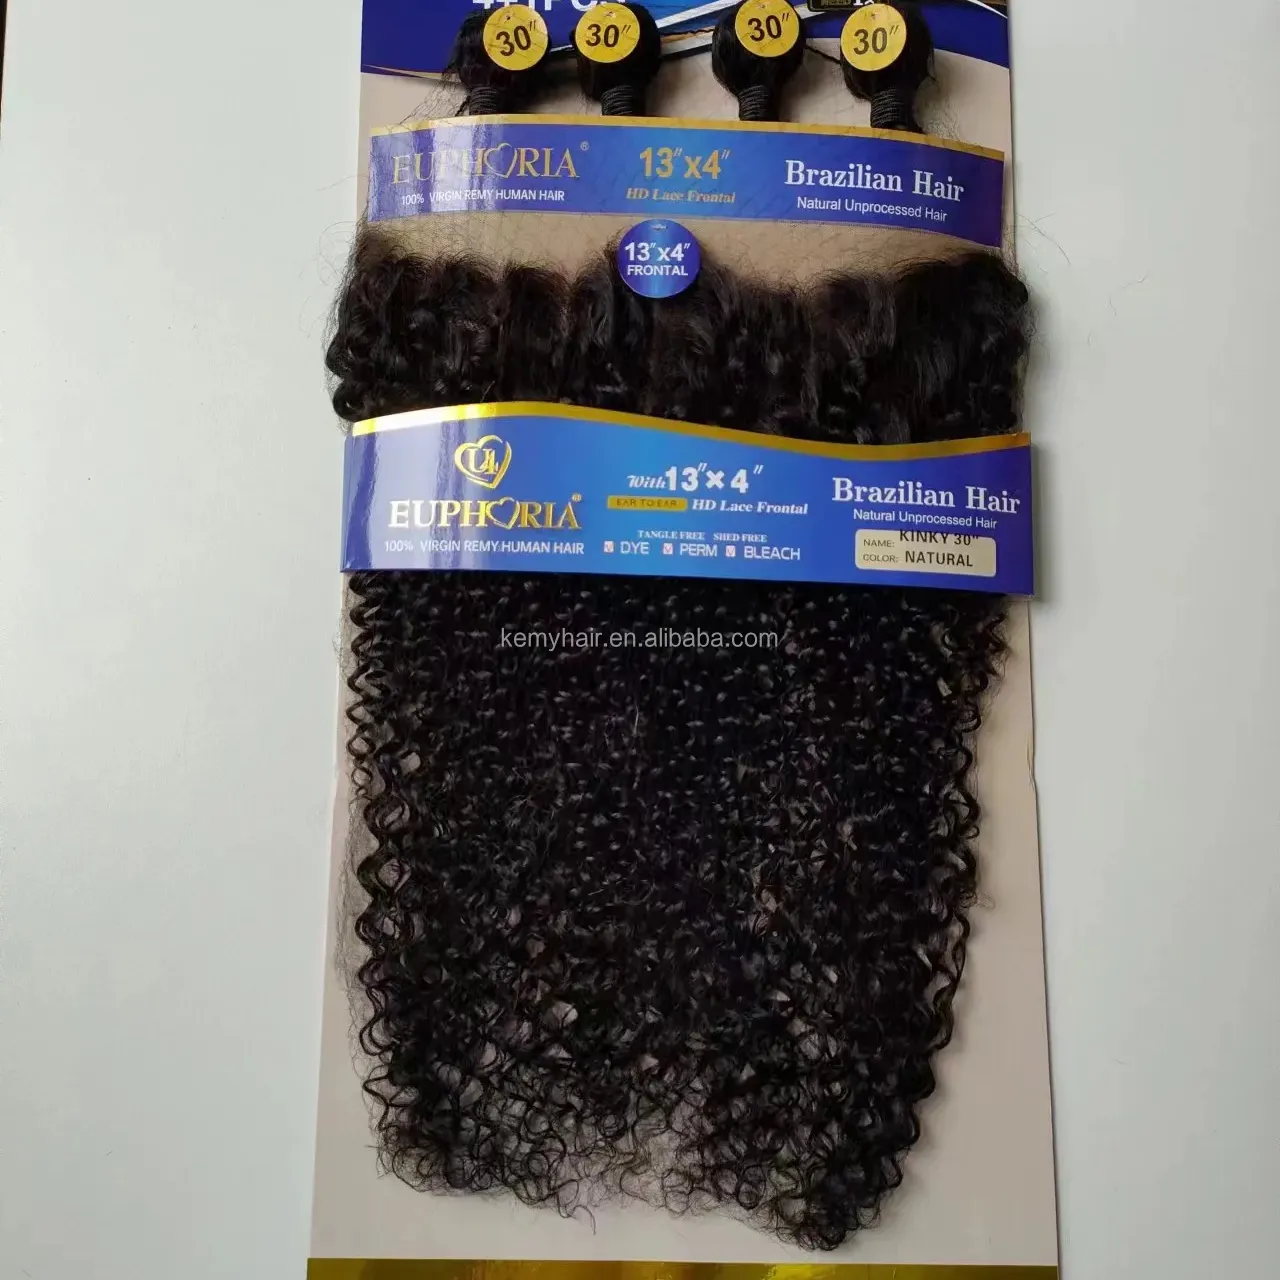 KEMY HAIR 4+1 Virgin Remy Human Hair Pack Bone Straight bundle with Frontal Vietnamese Double Drawn Bundles Wigs for Black Women